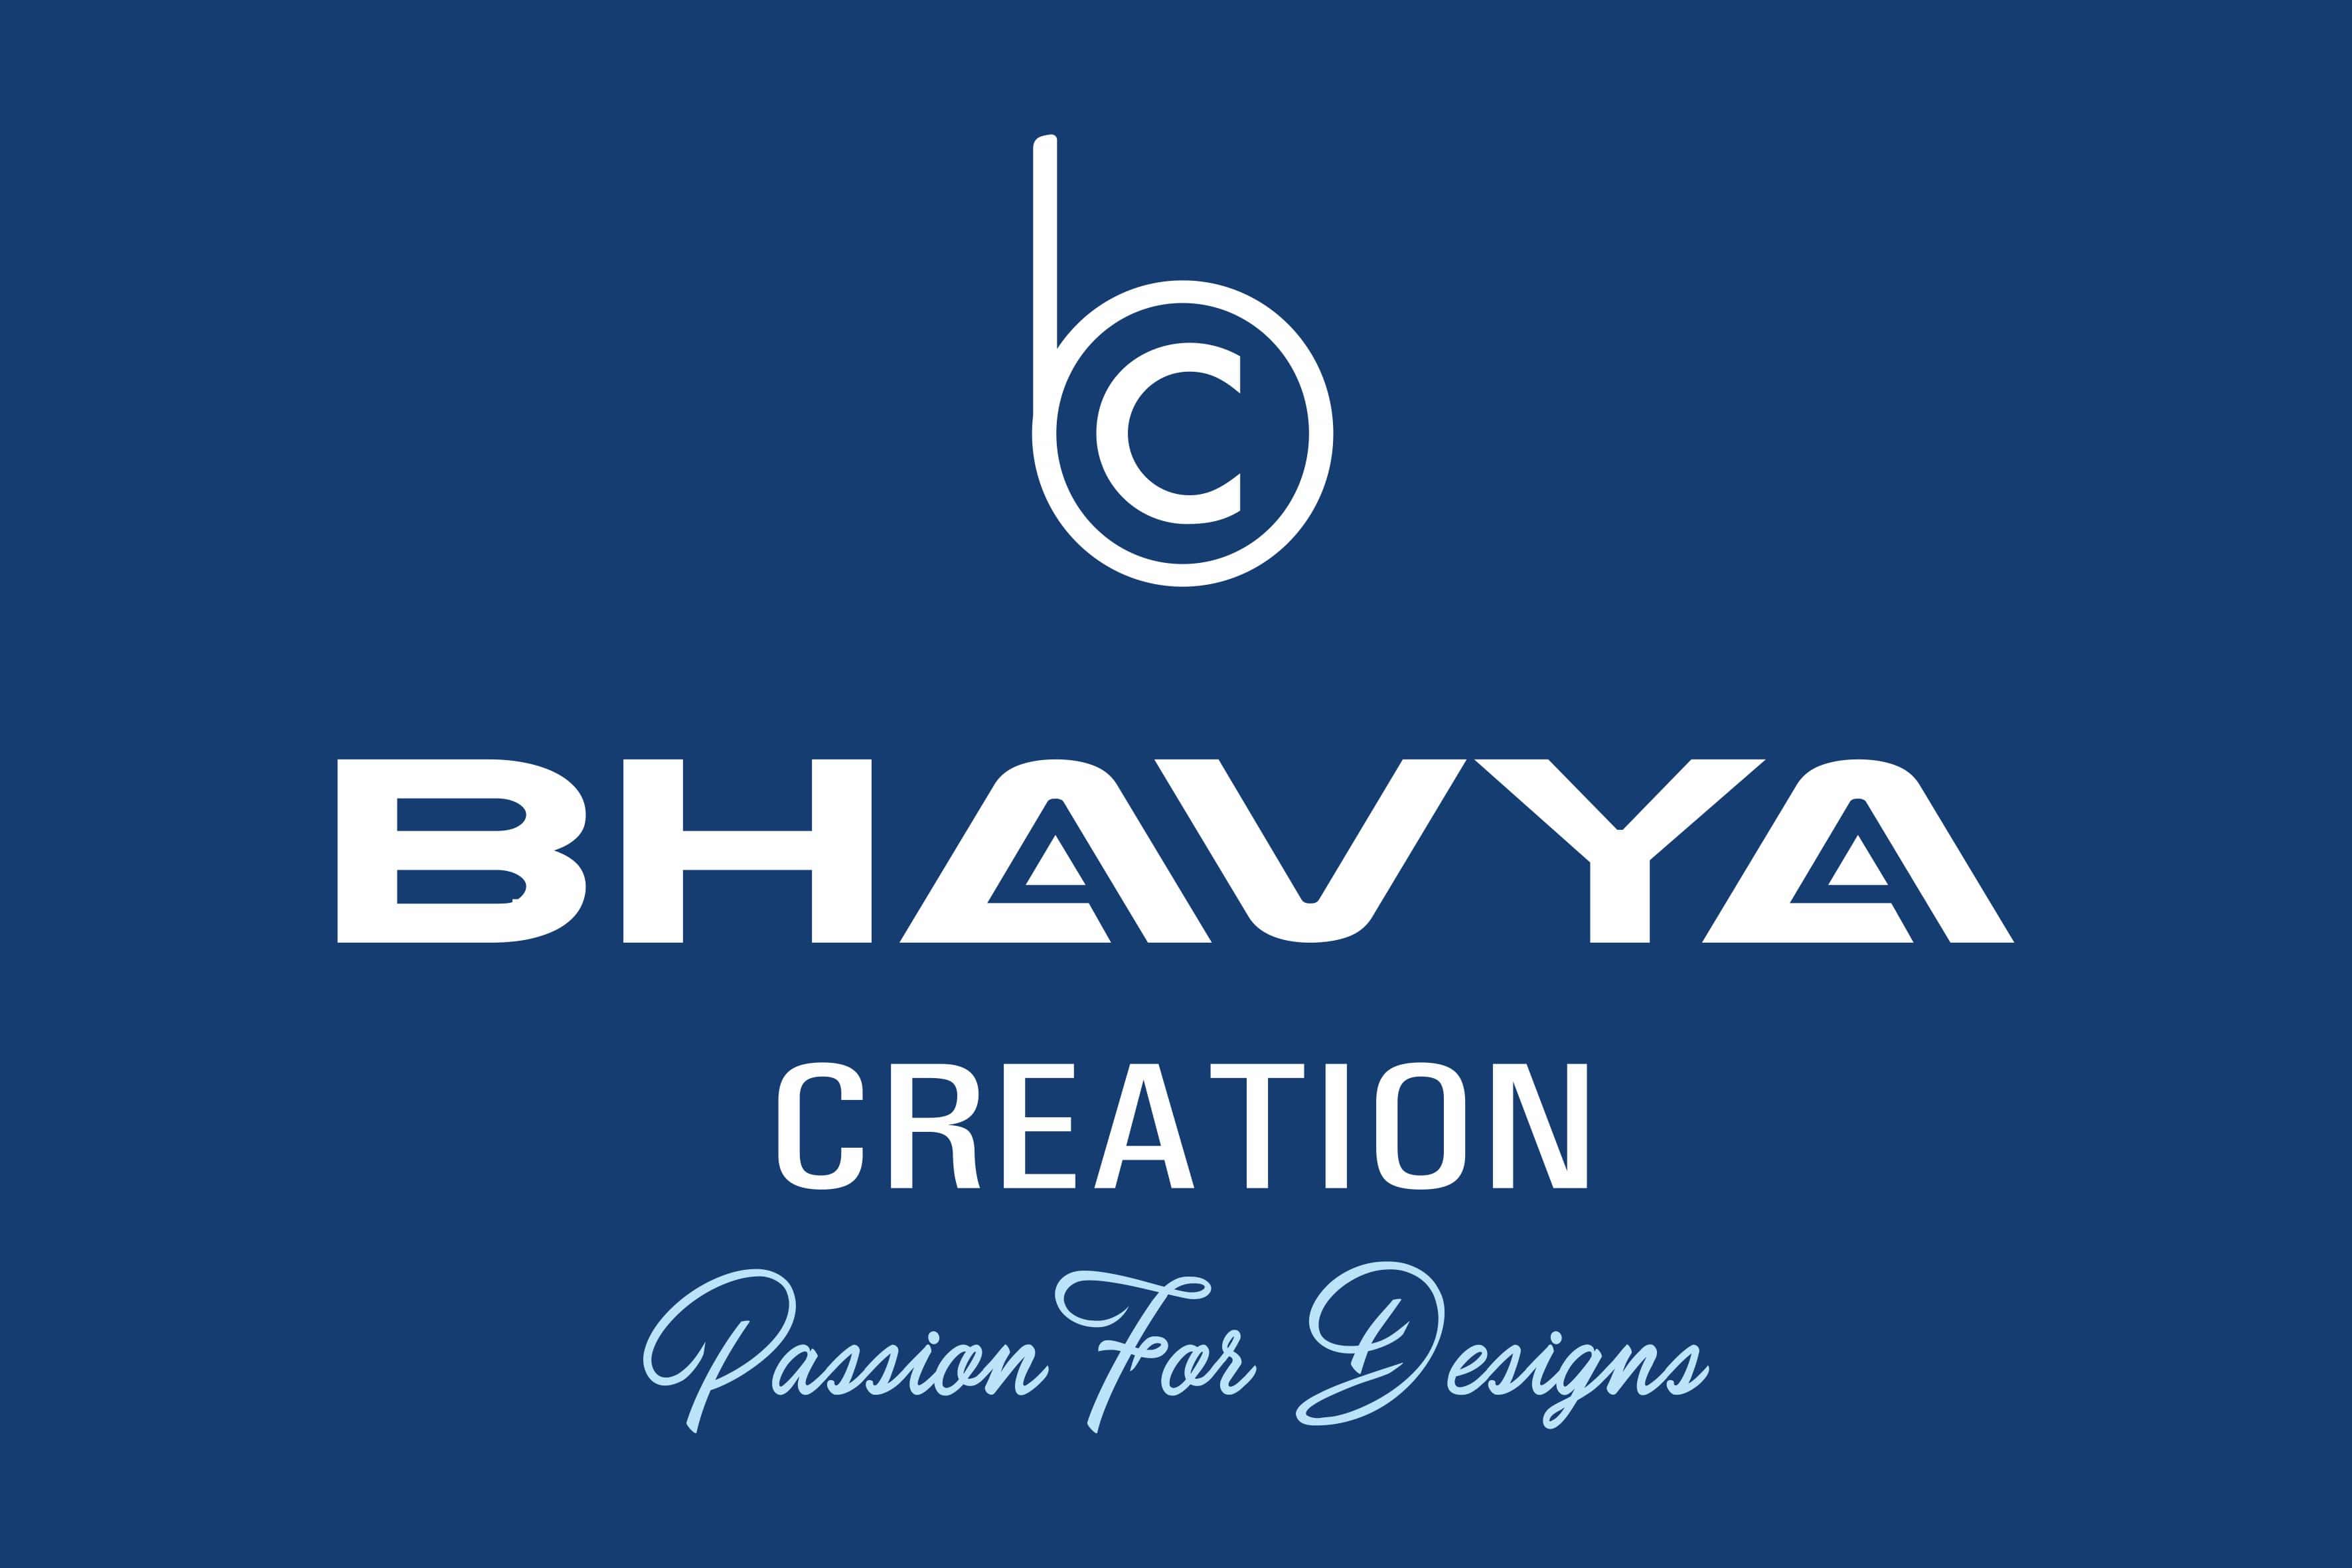 Bhavya Enterprise